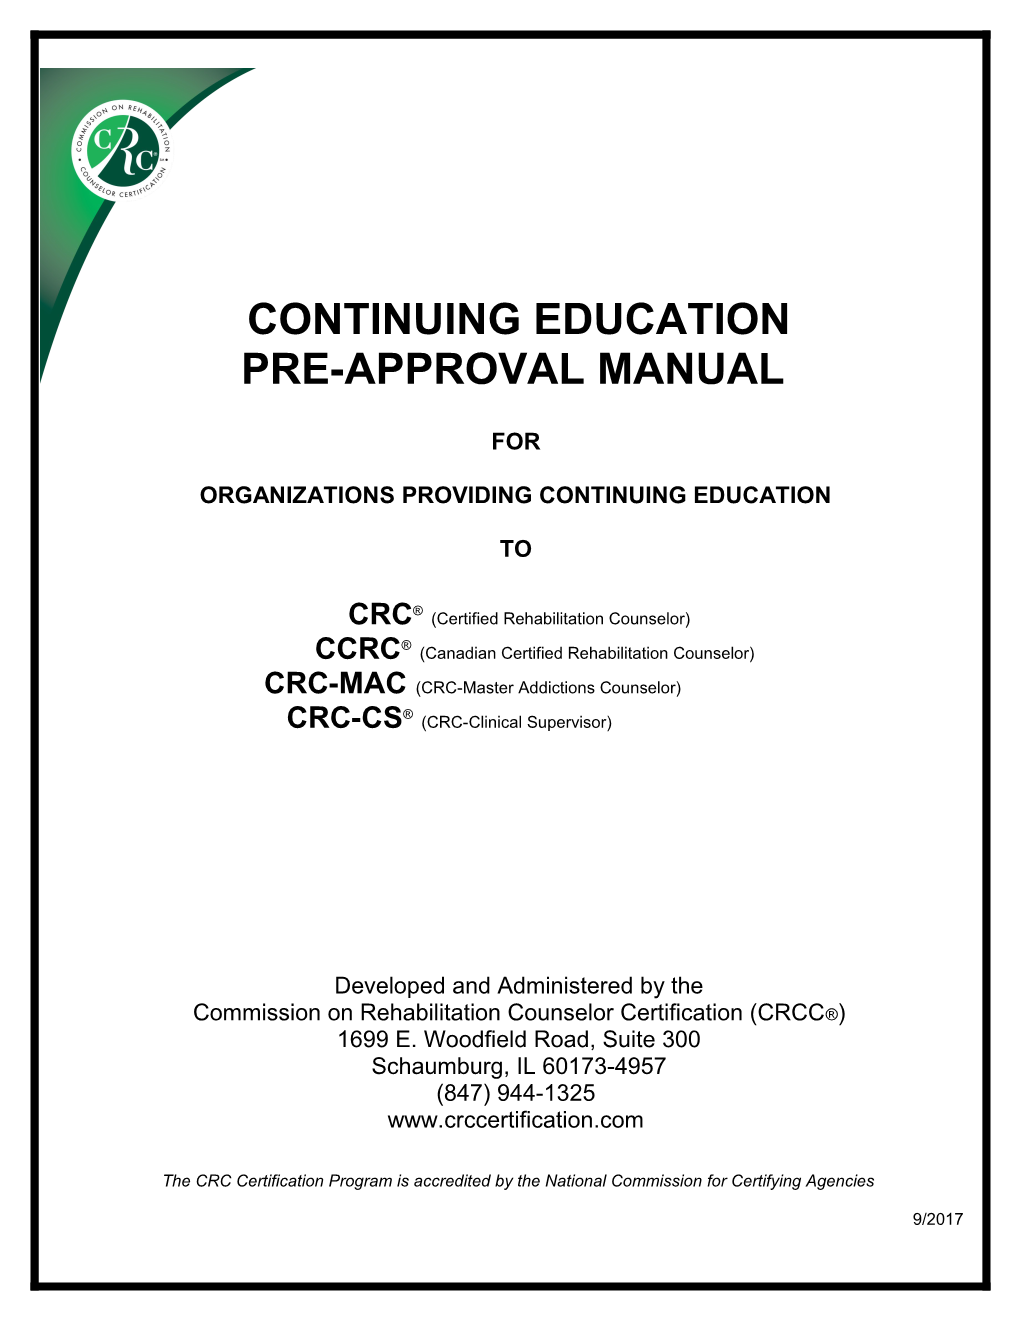 Organizations Providing Continuing Education